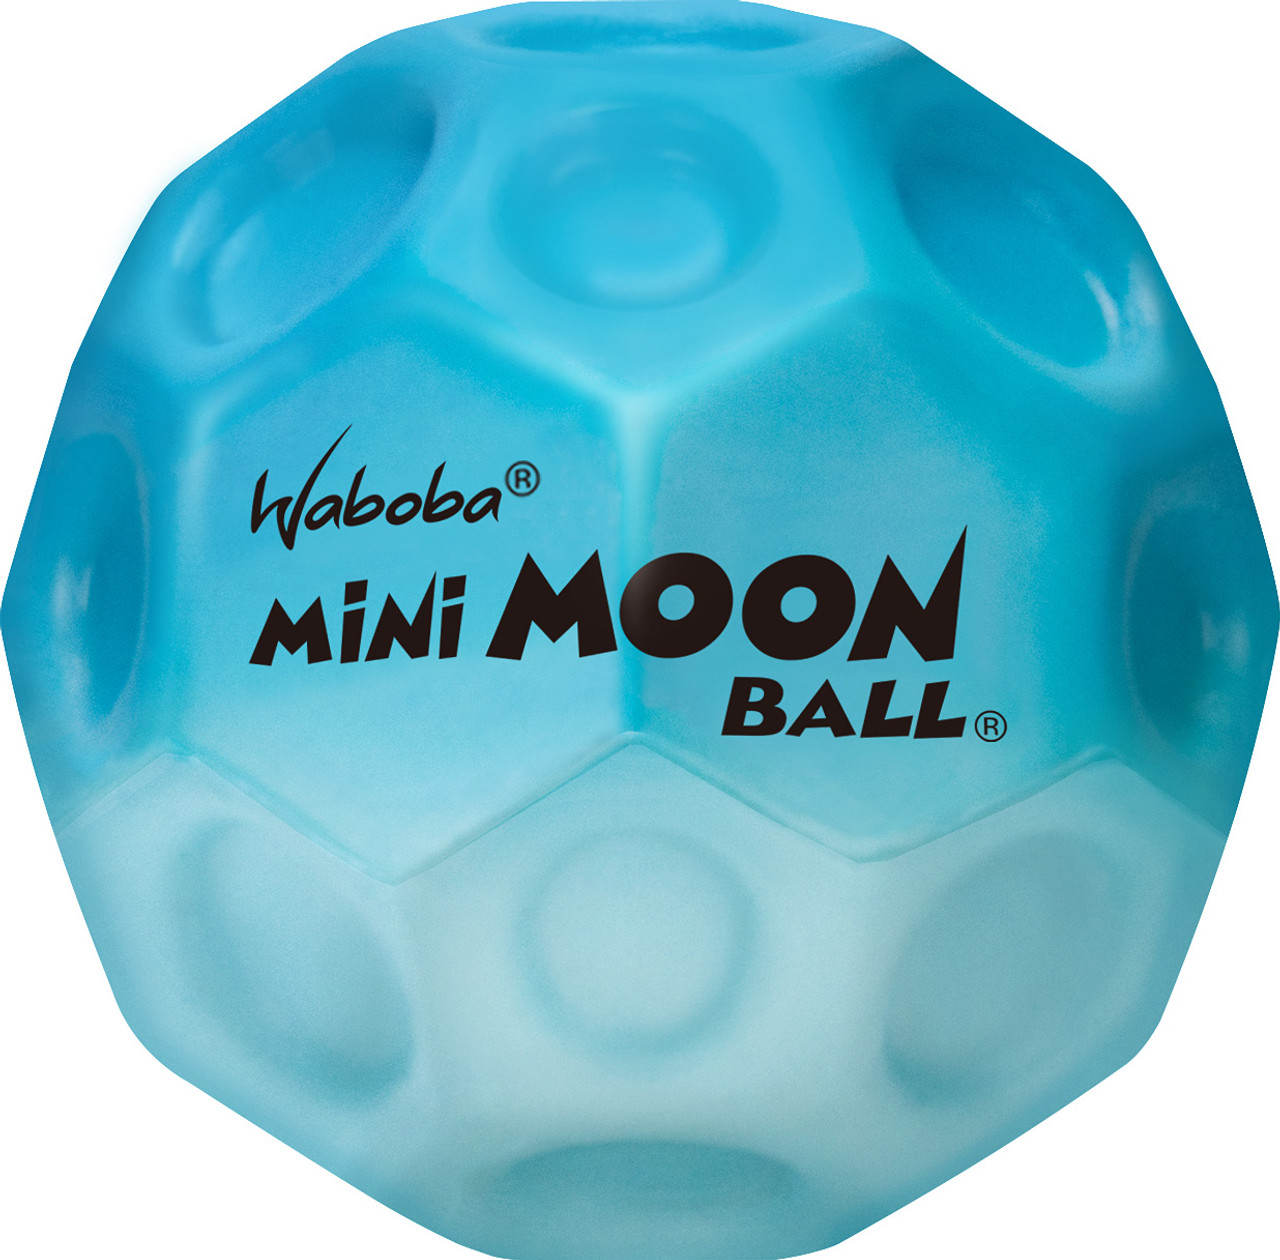 Waboba Mini Moon Ball 2